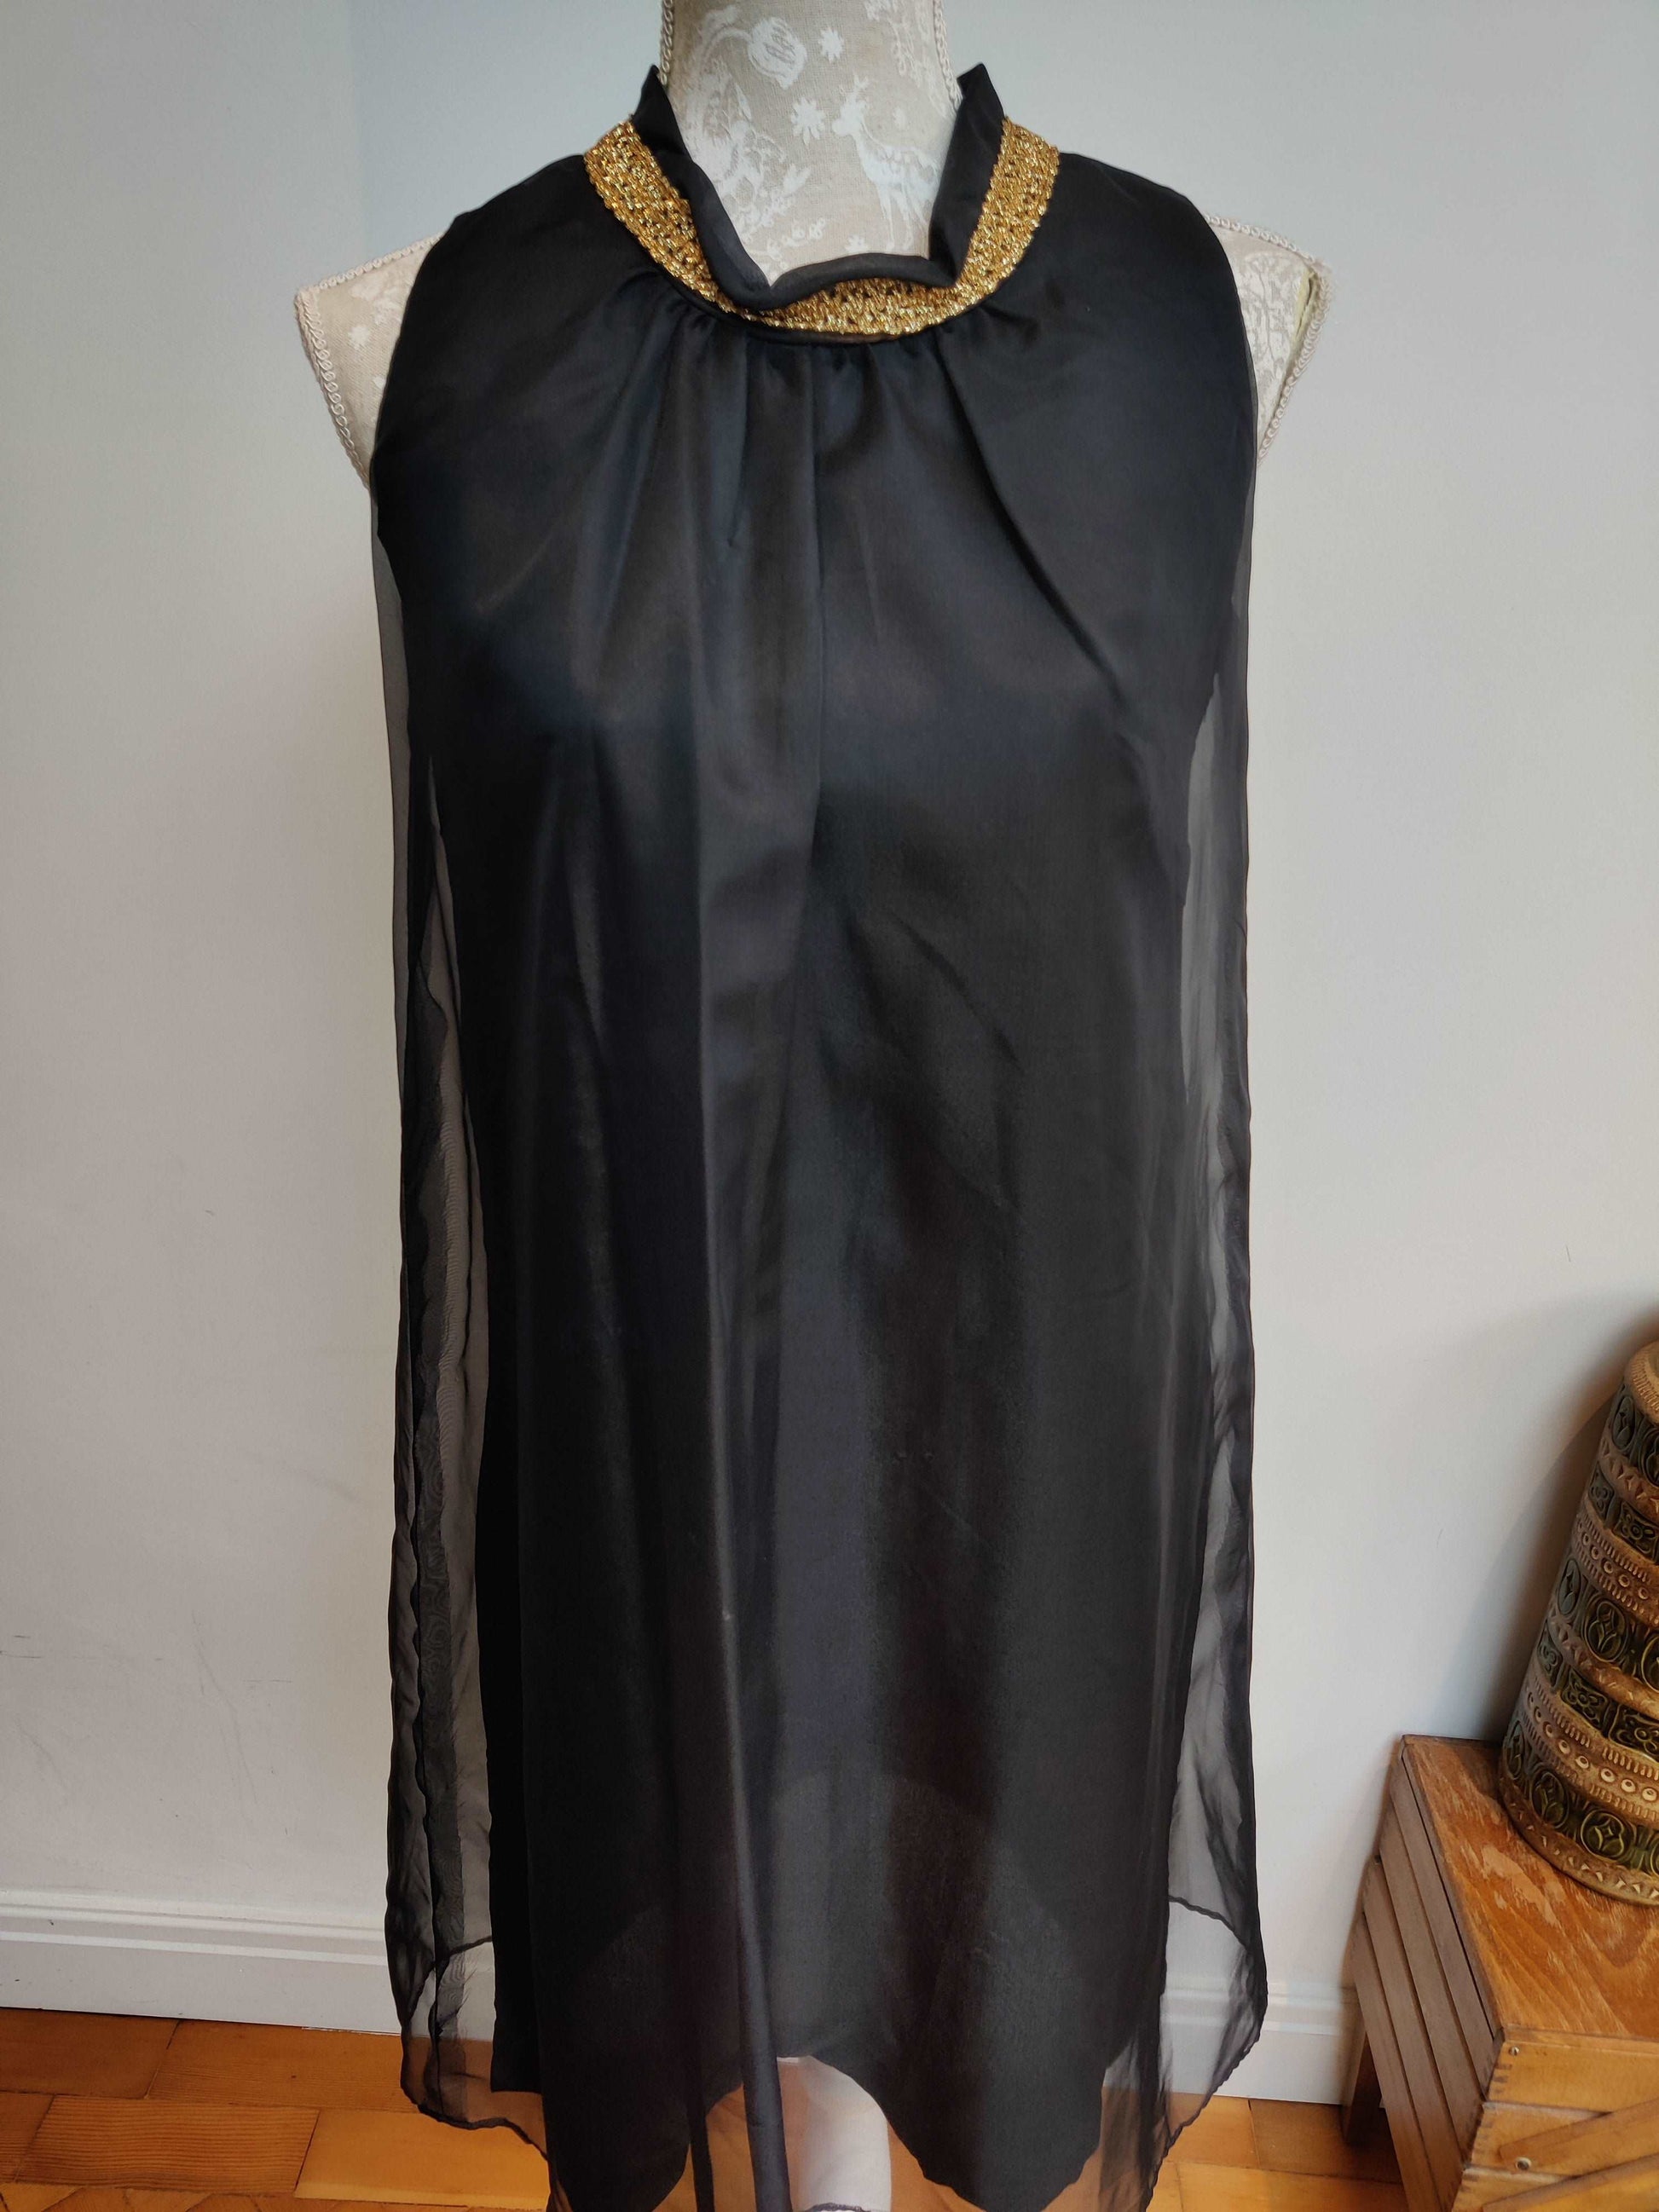 Sleeveless black vintage dress size 10